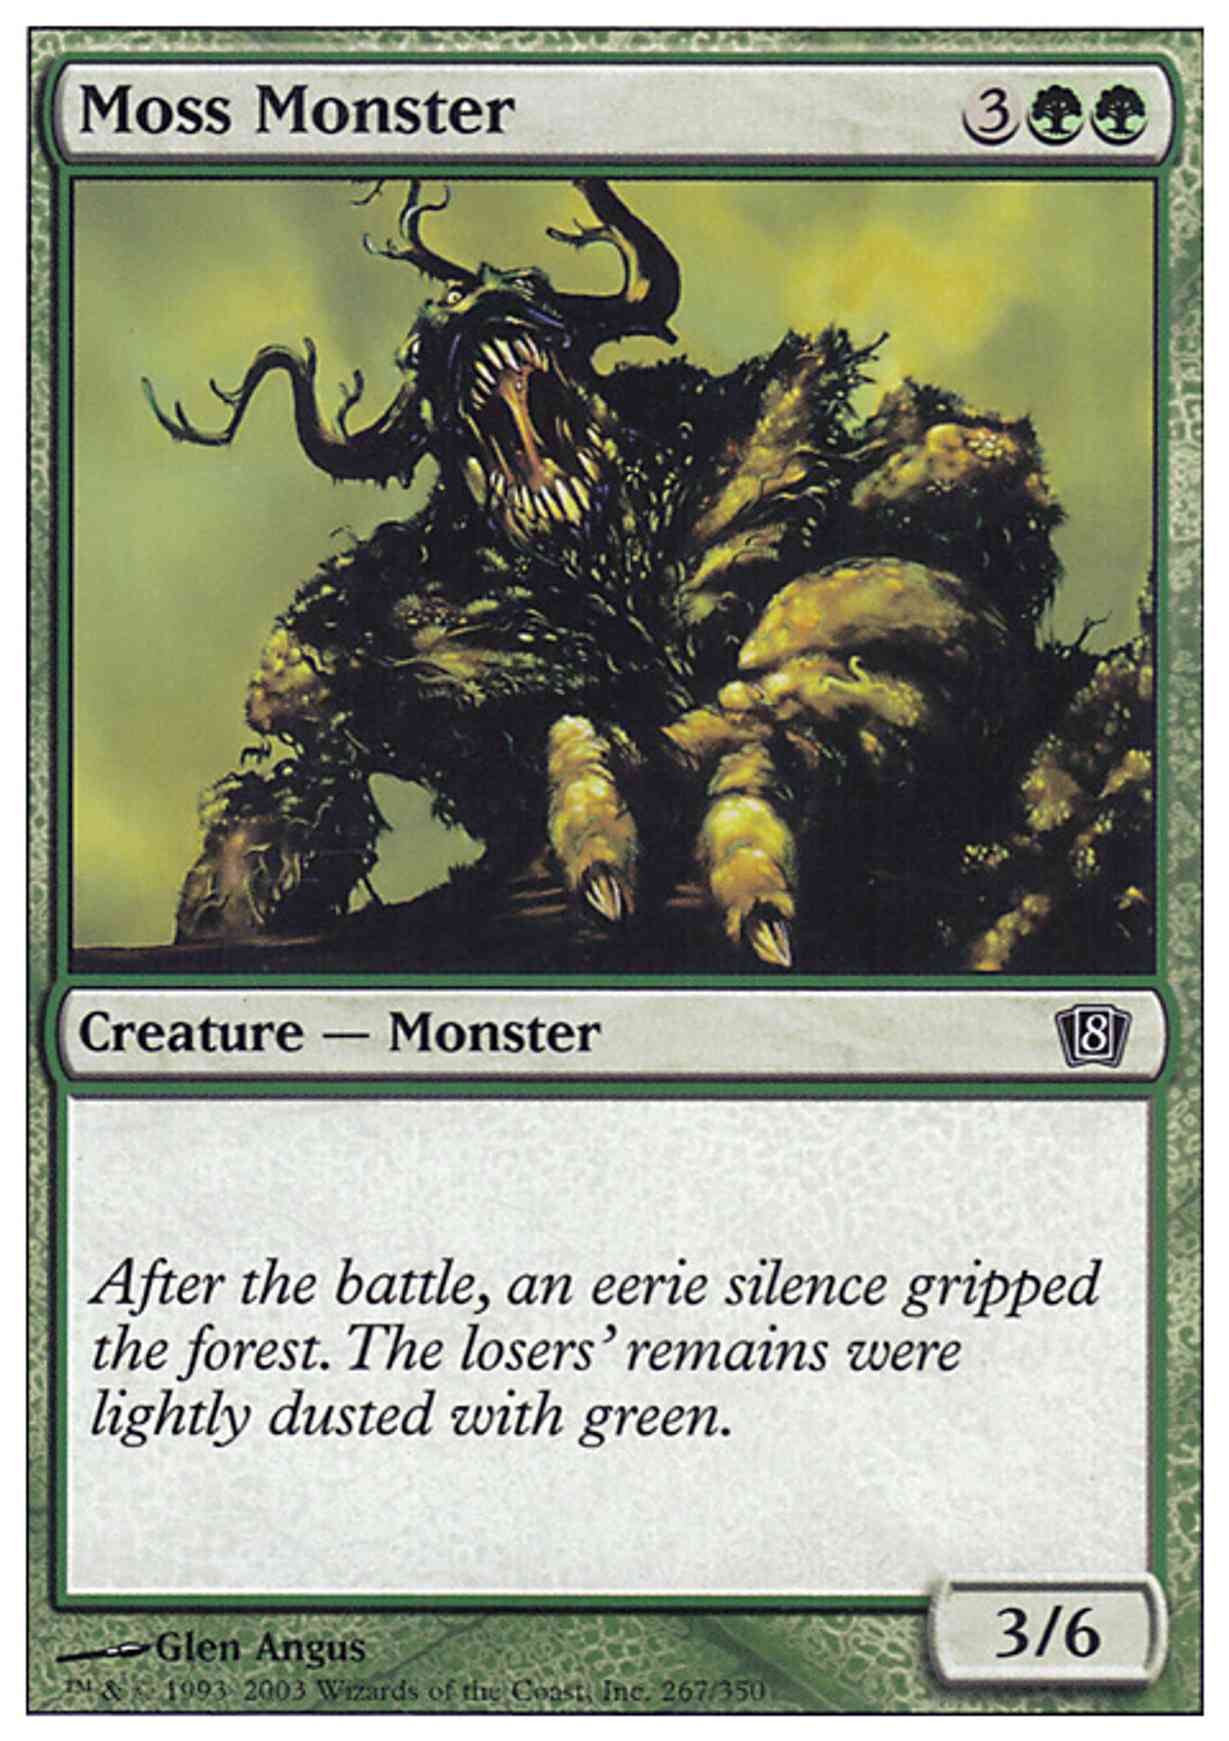 Moss Monster magic card front